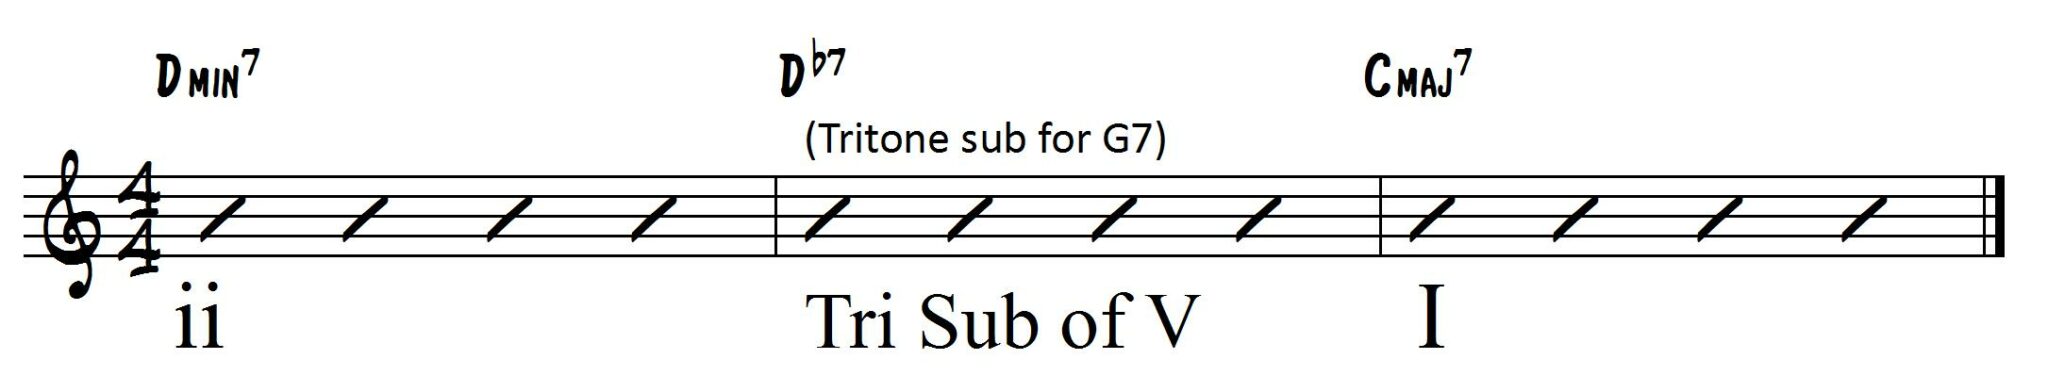 Tritone Substitution Chart Pdf